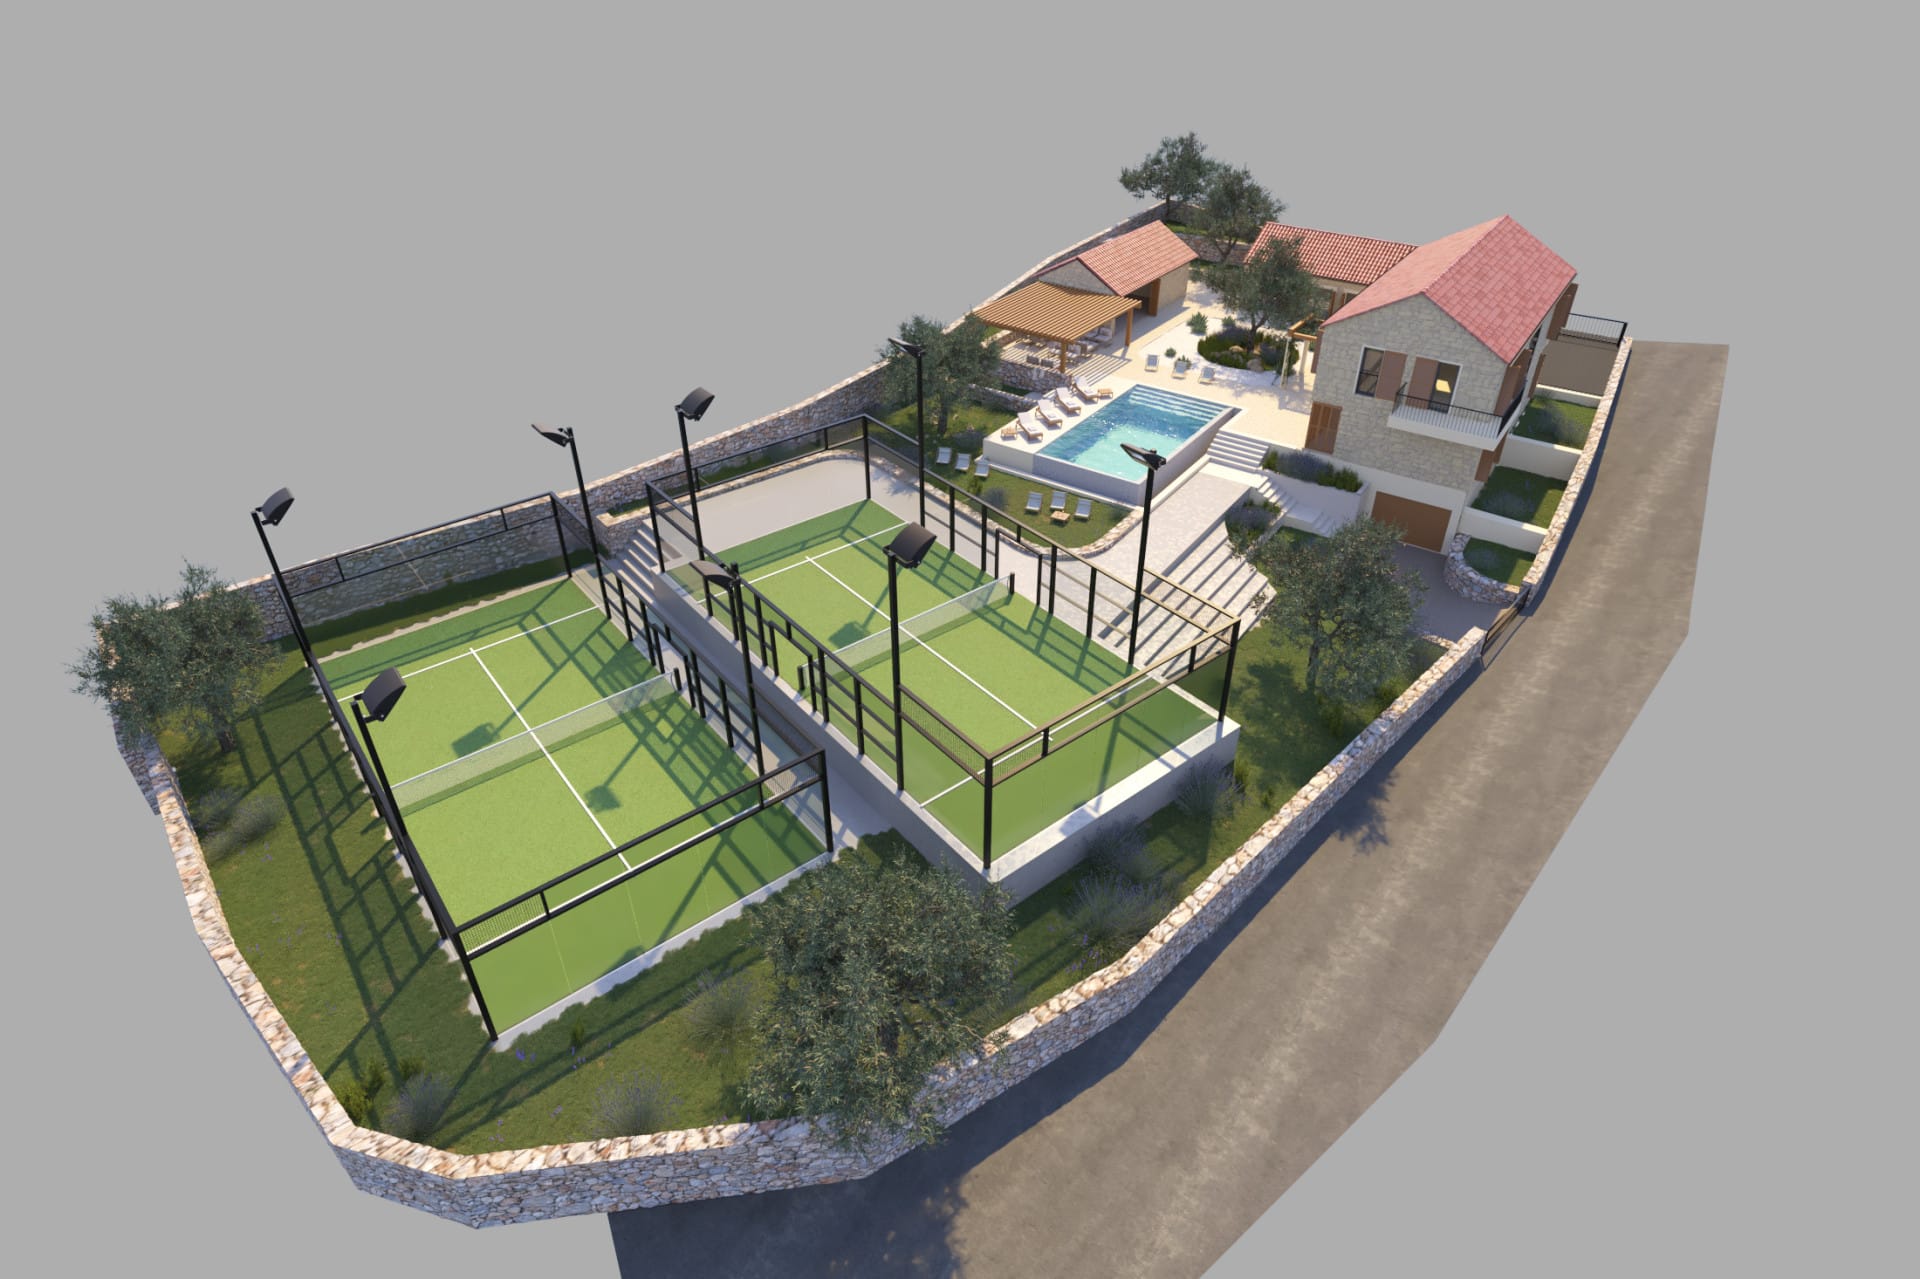 Padel resort with two padel playgrounds in the first plan, as seen at Padel Šolta resort in Croatia